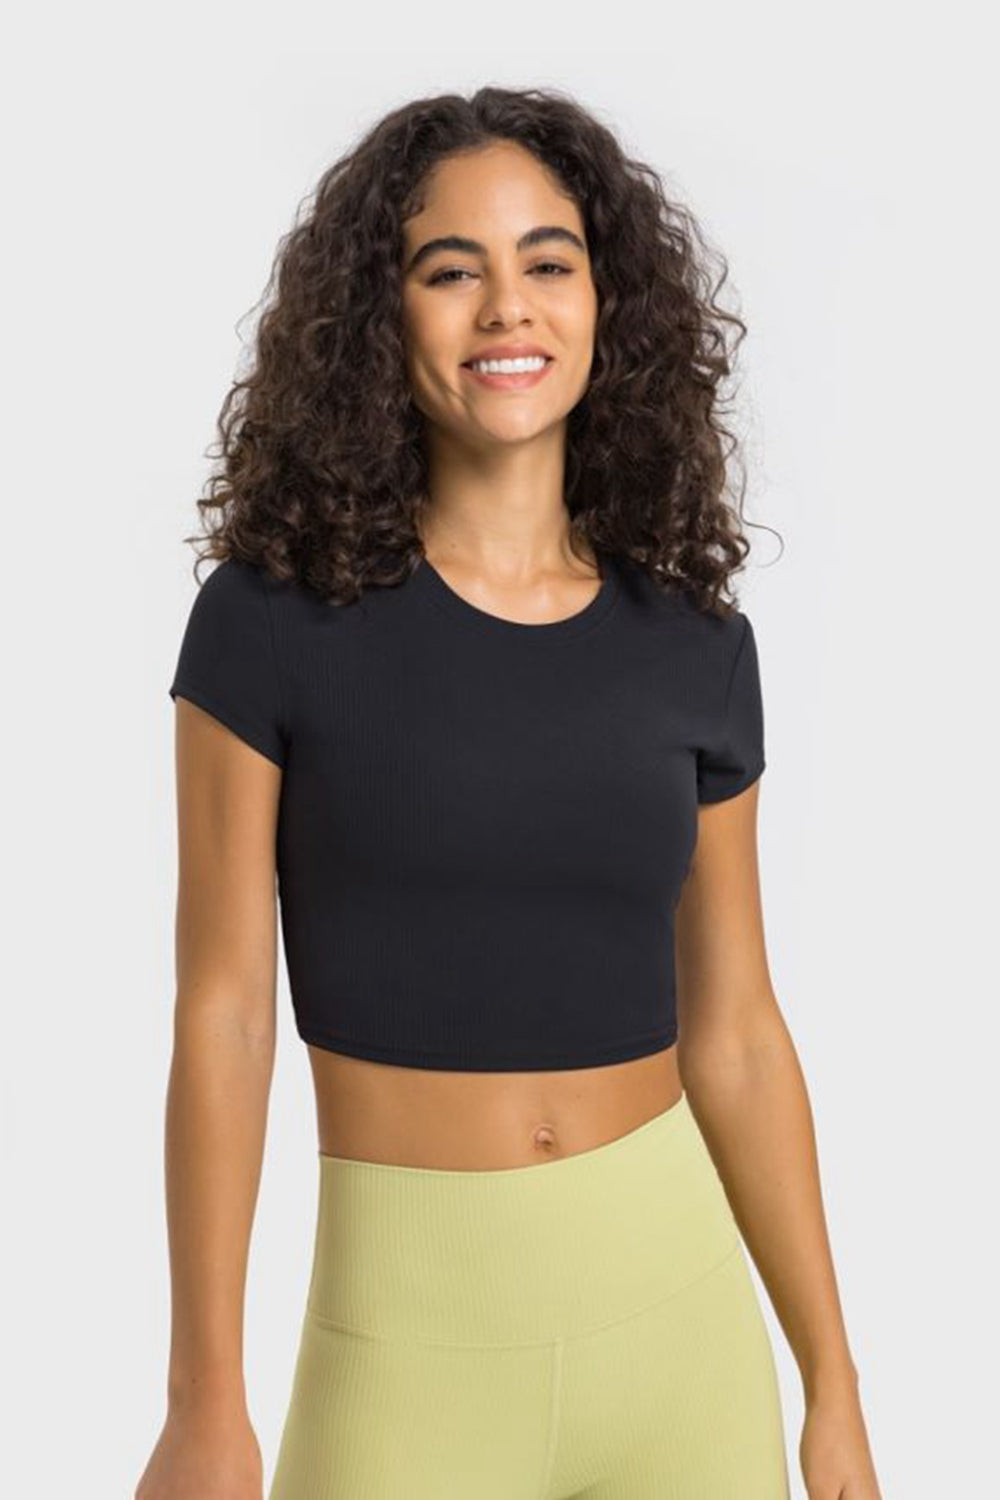 Women's Round Neck Short Sleeve Cropped Sports T-Shirt